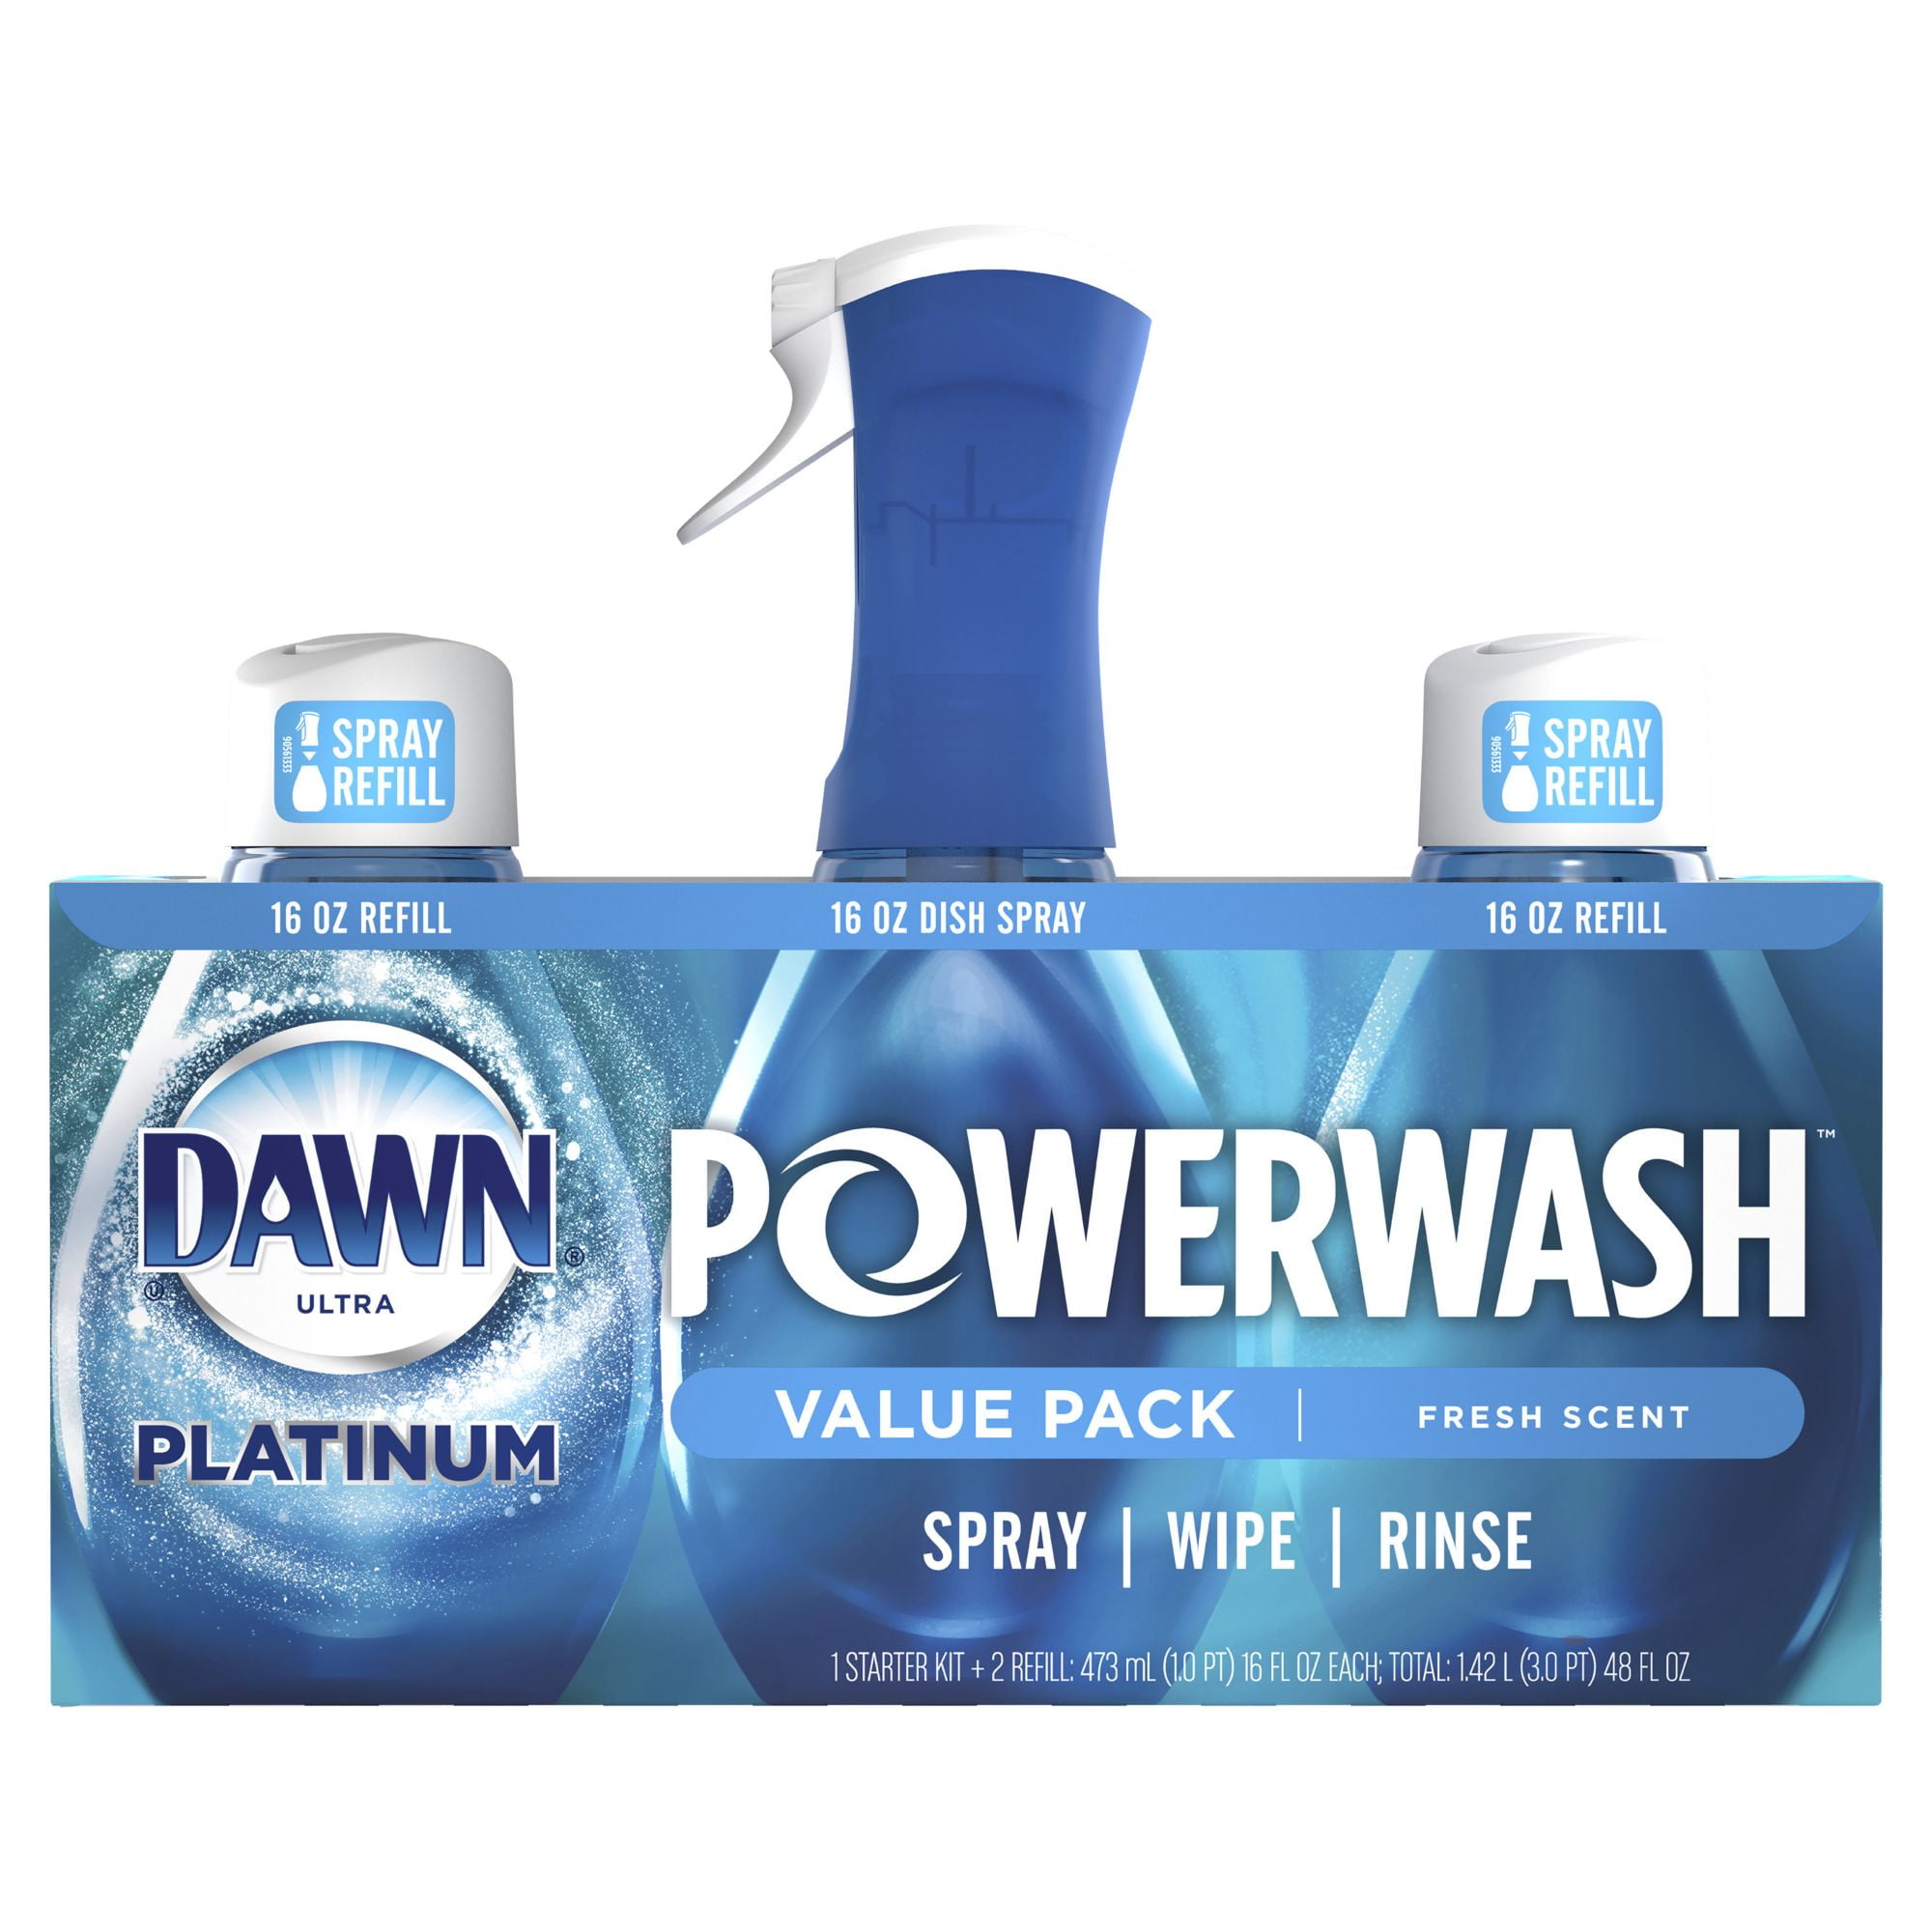 Buy 1 Dawn Powerwash Get 1 Refill FREE! 2/27-3/5